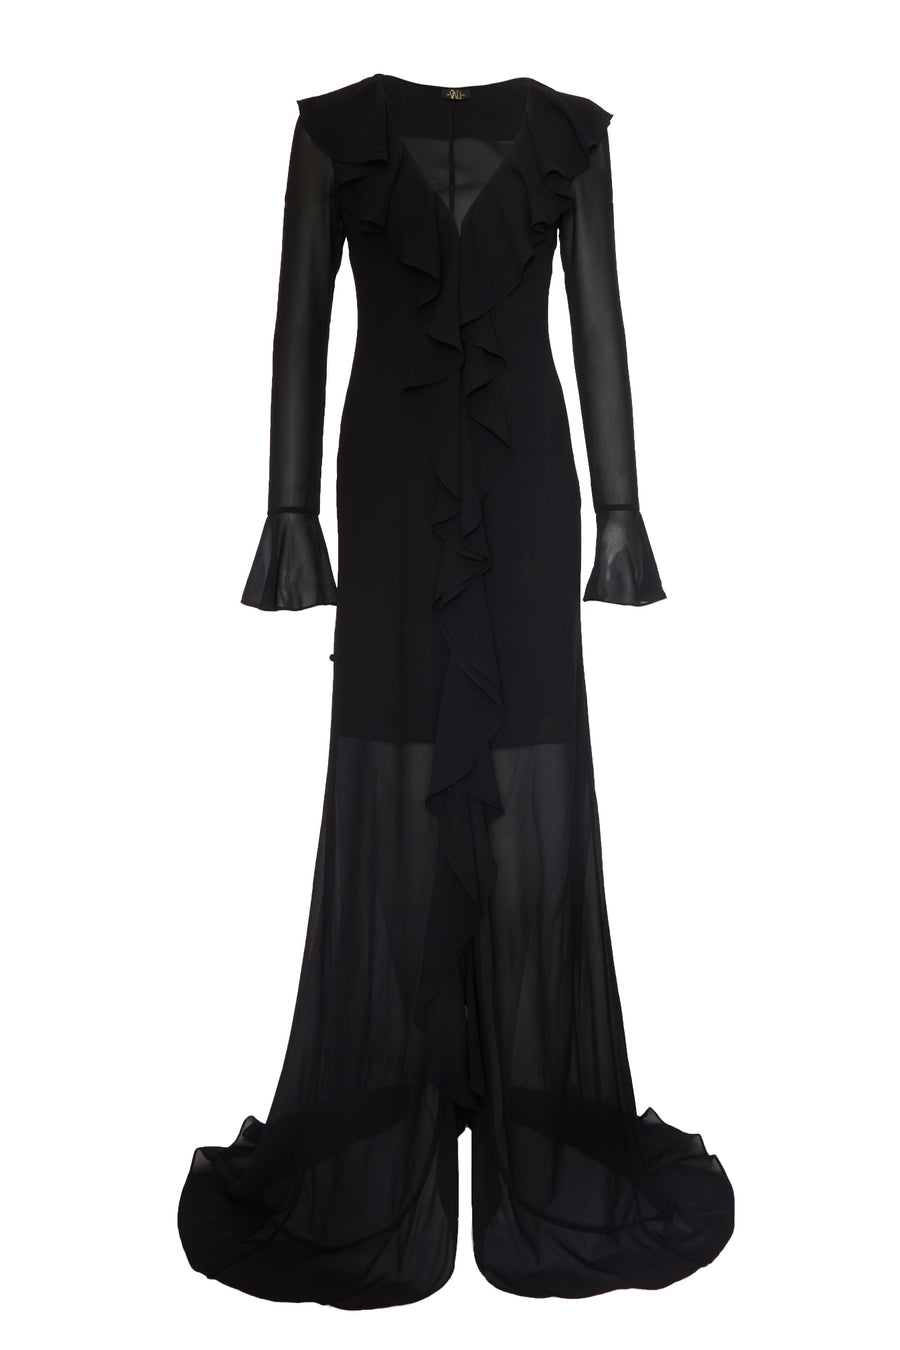 TANGERINE MAXI DRESS IN BLACK CHIFFON - De La Vali